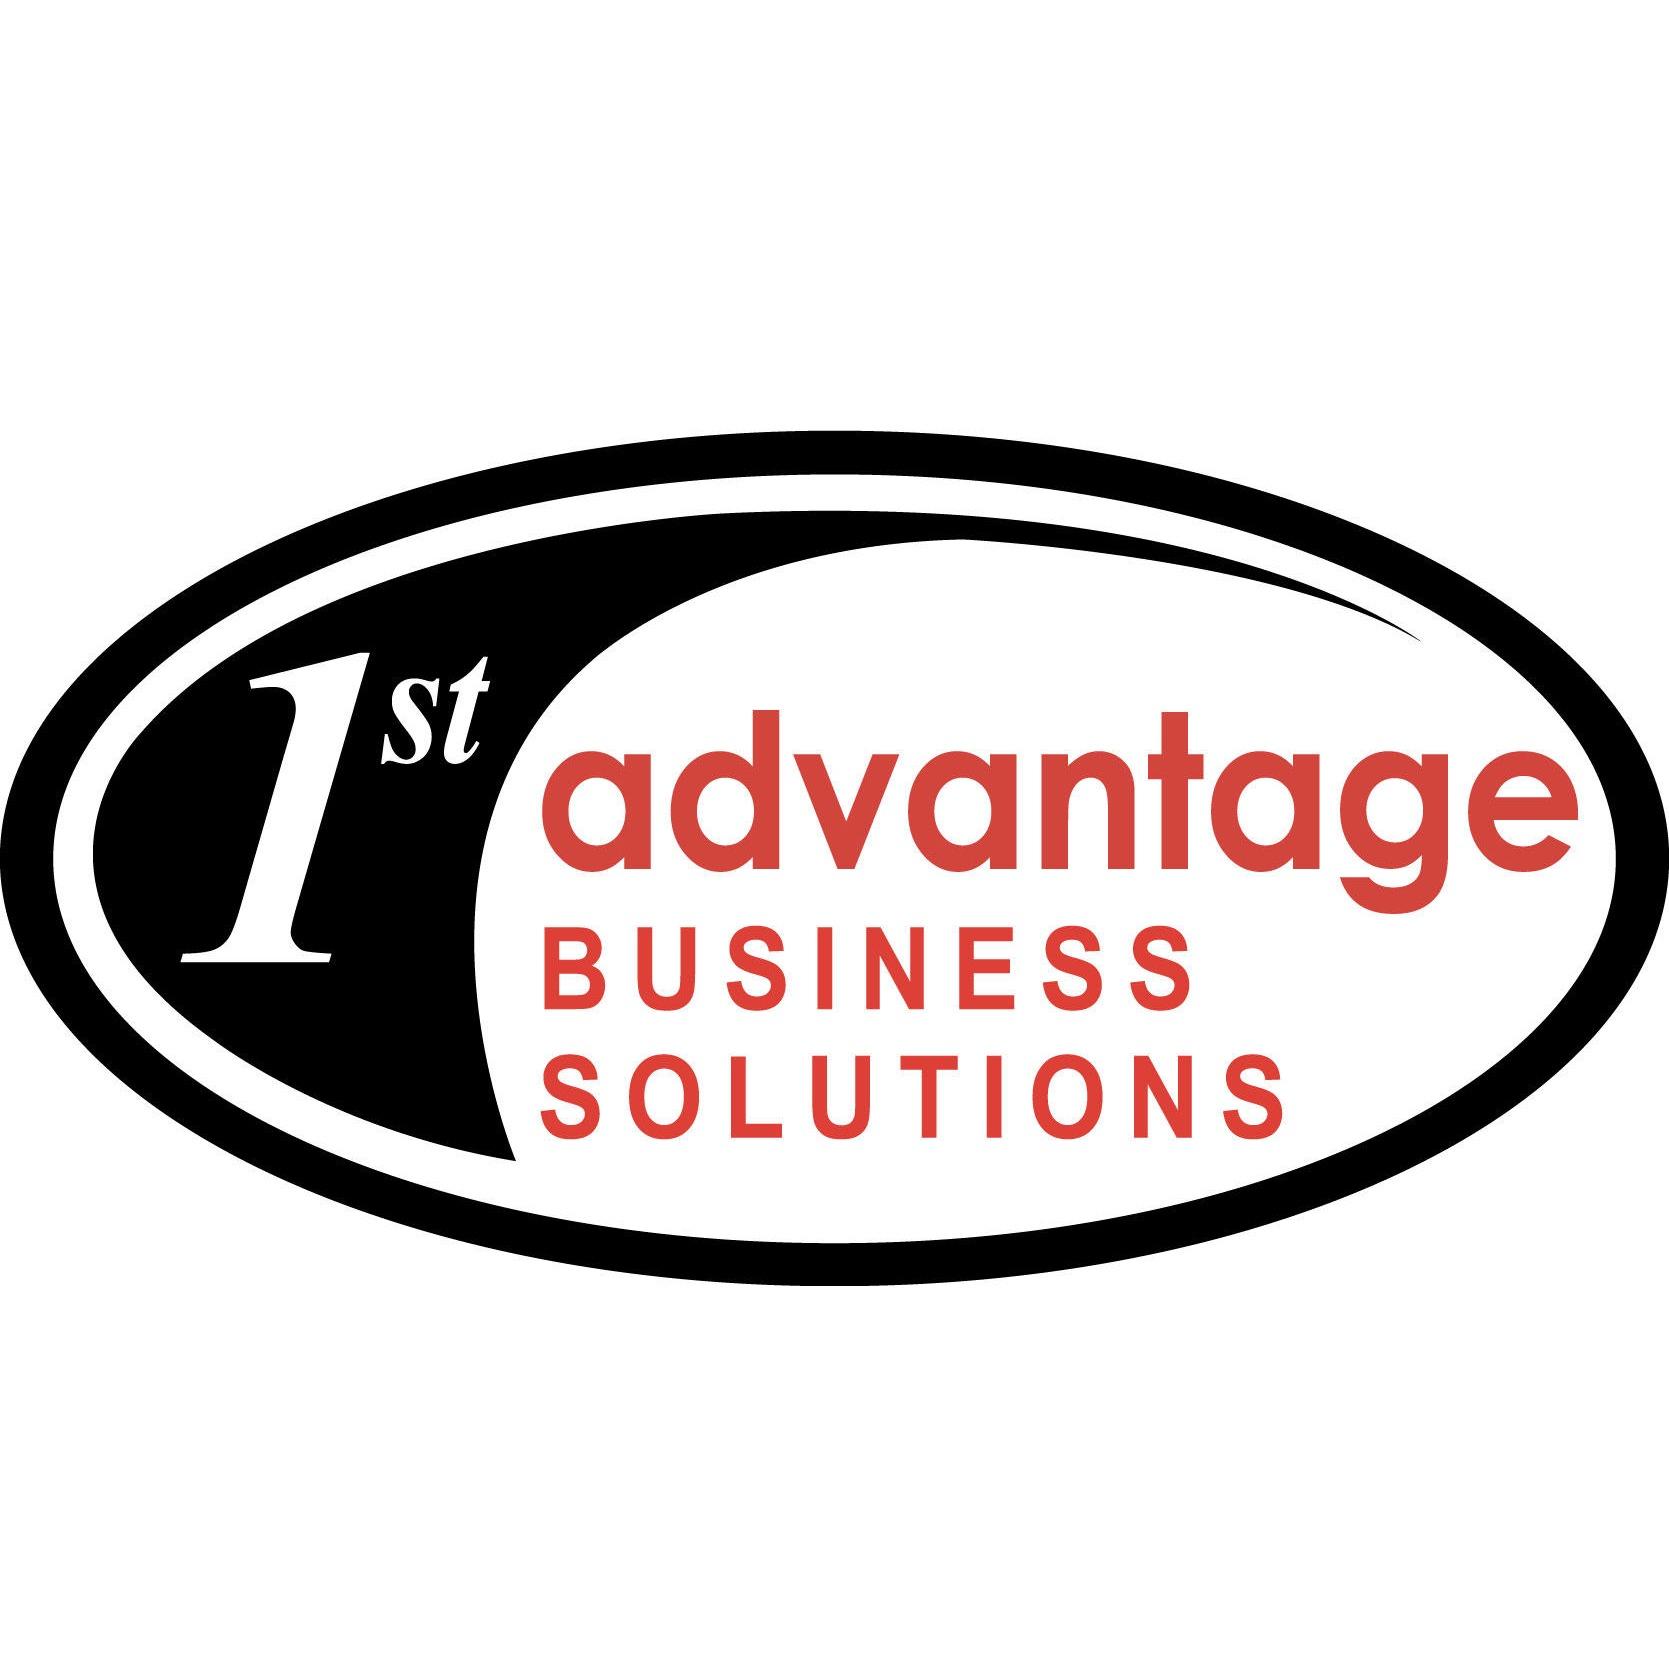 1st Advantage Business Solutions Photo